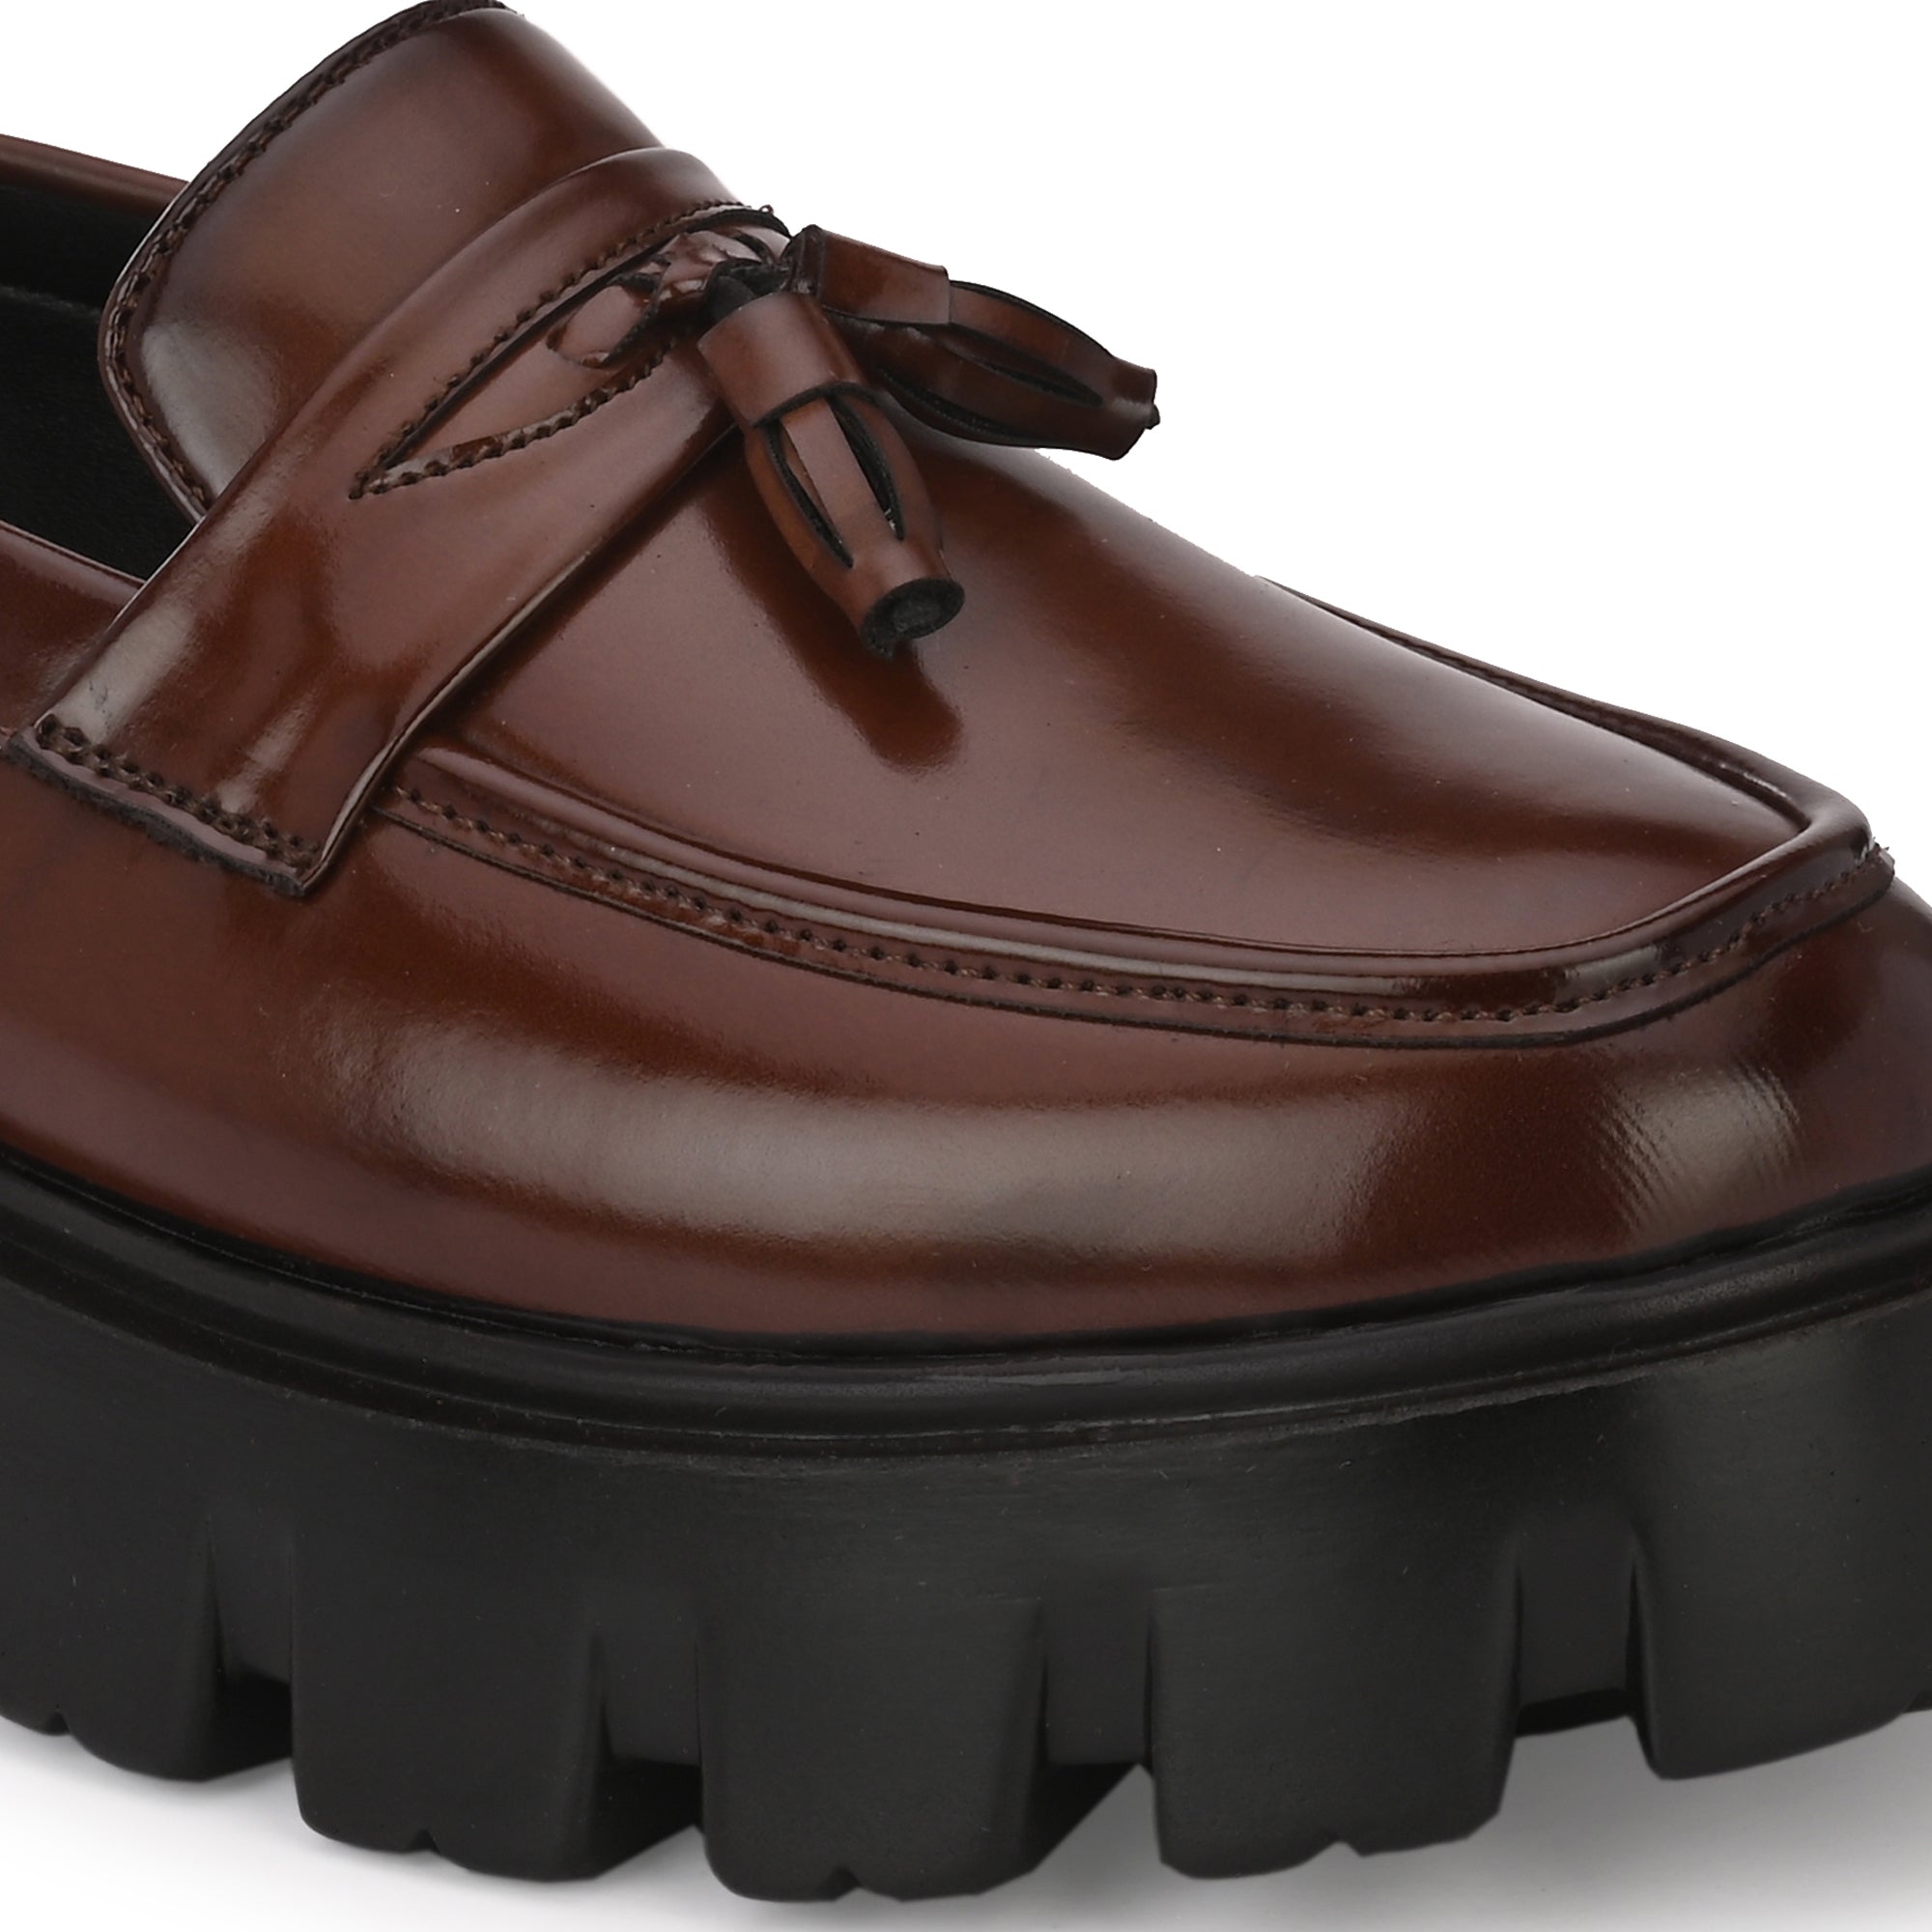 attitudist-glossy-brown-high-heel-tassel-loafers-for-men